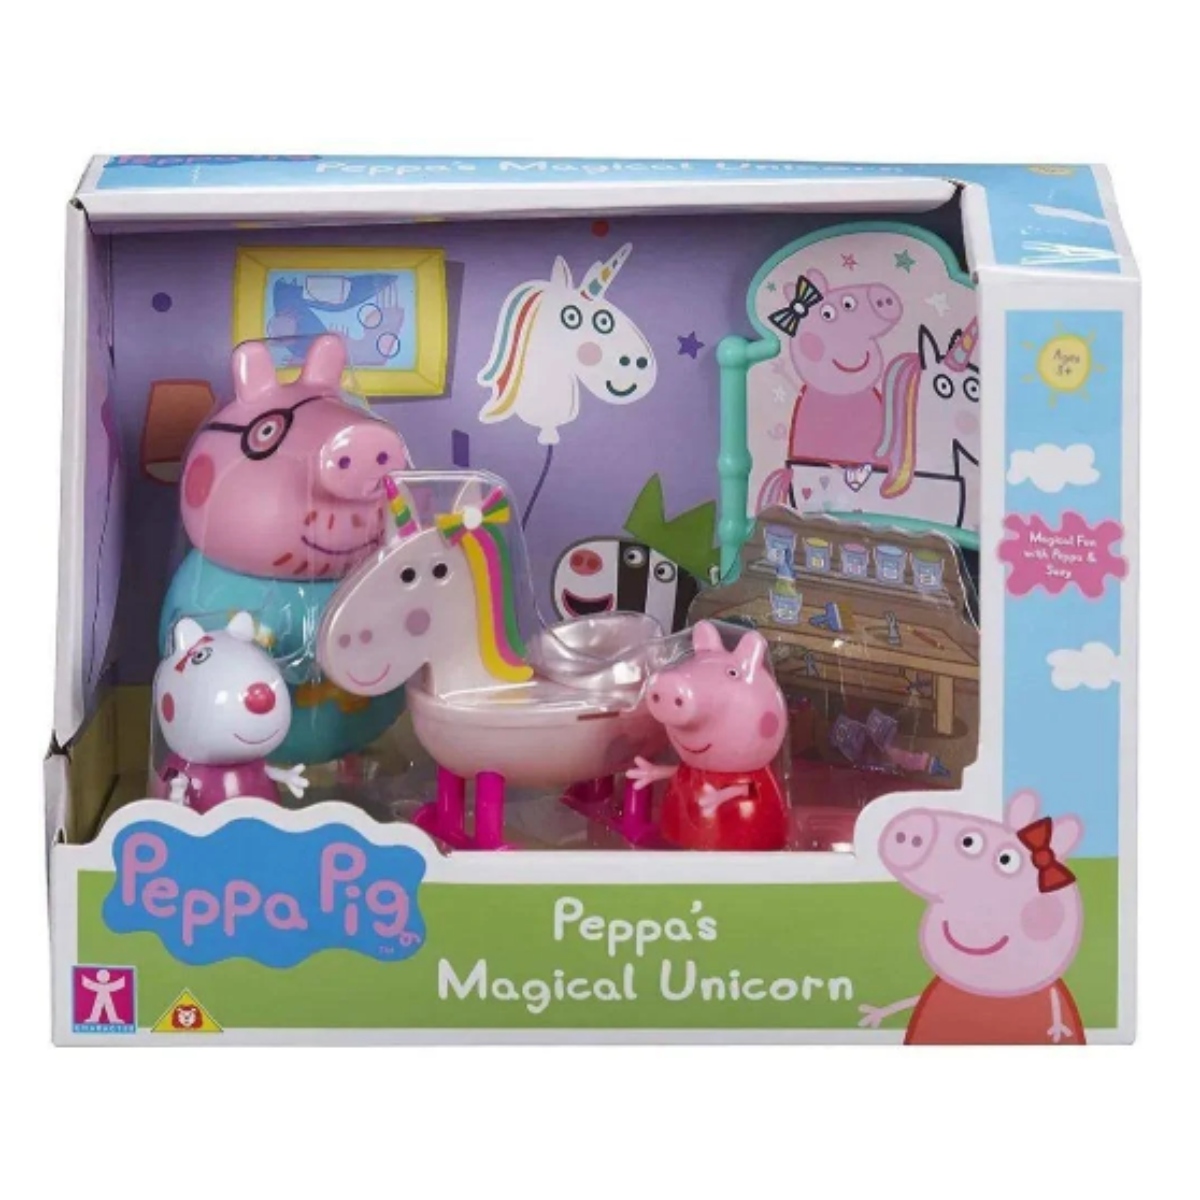 Peppa Pig | Universo do Unicórnio Mágico